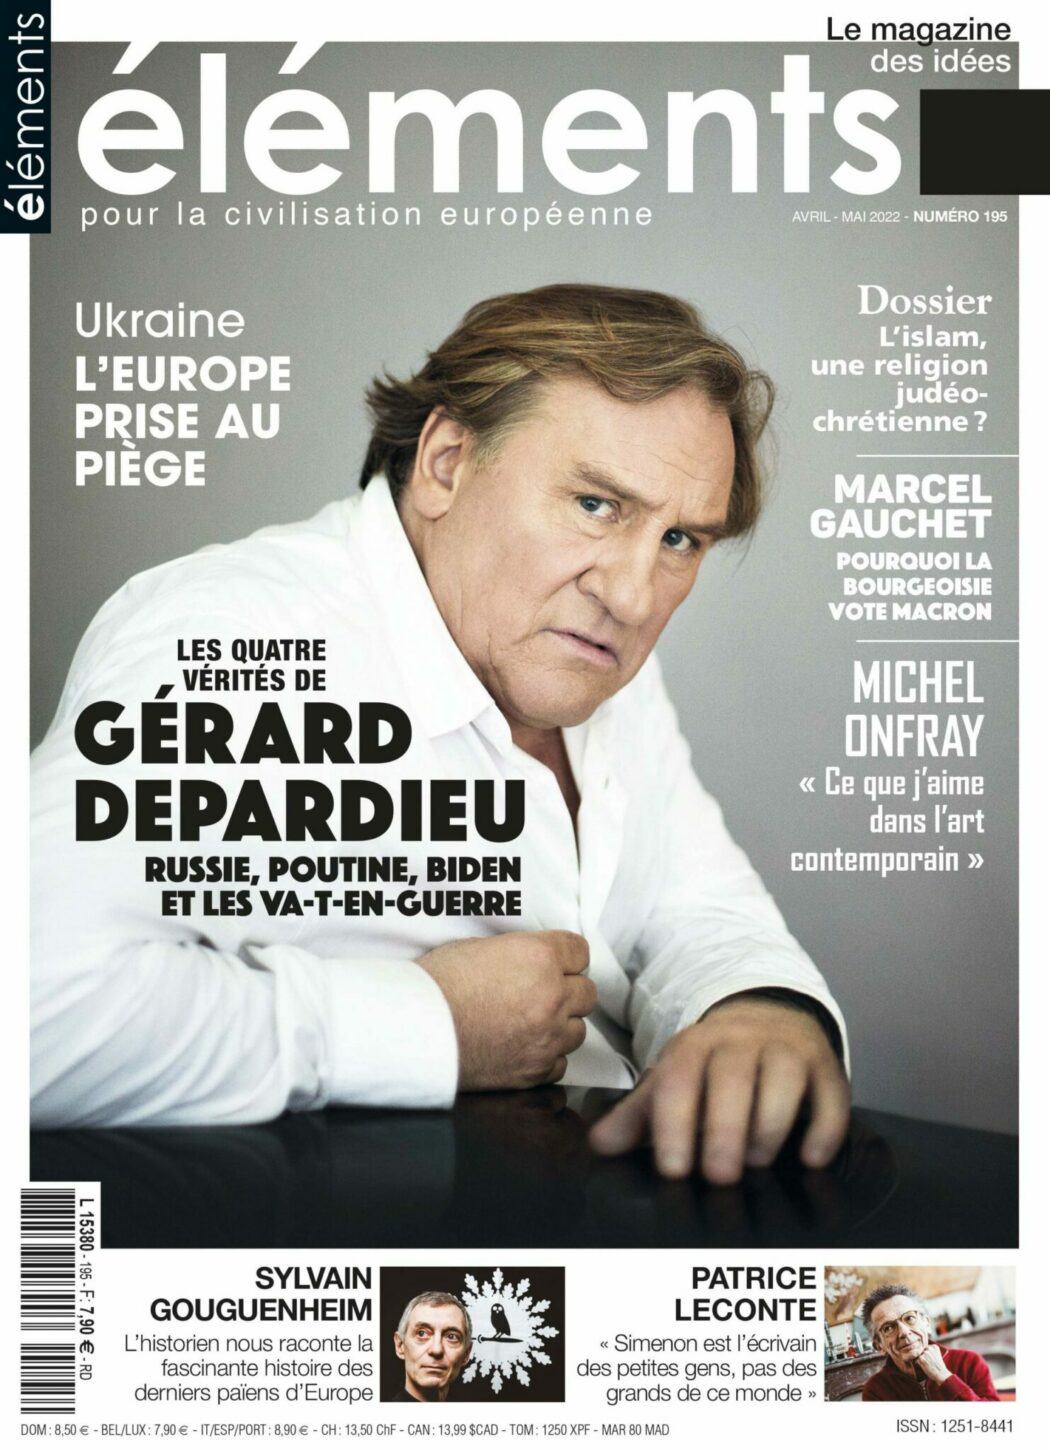 Gérard Depardieu : “J’aime beaucoup Poutine”